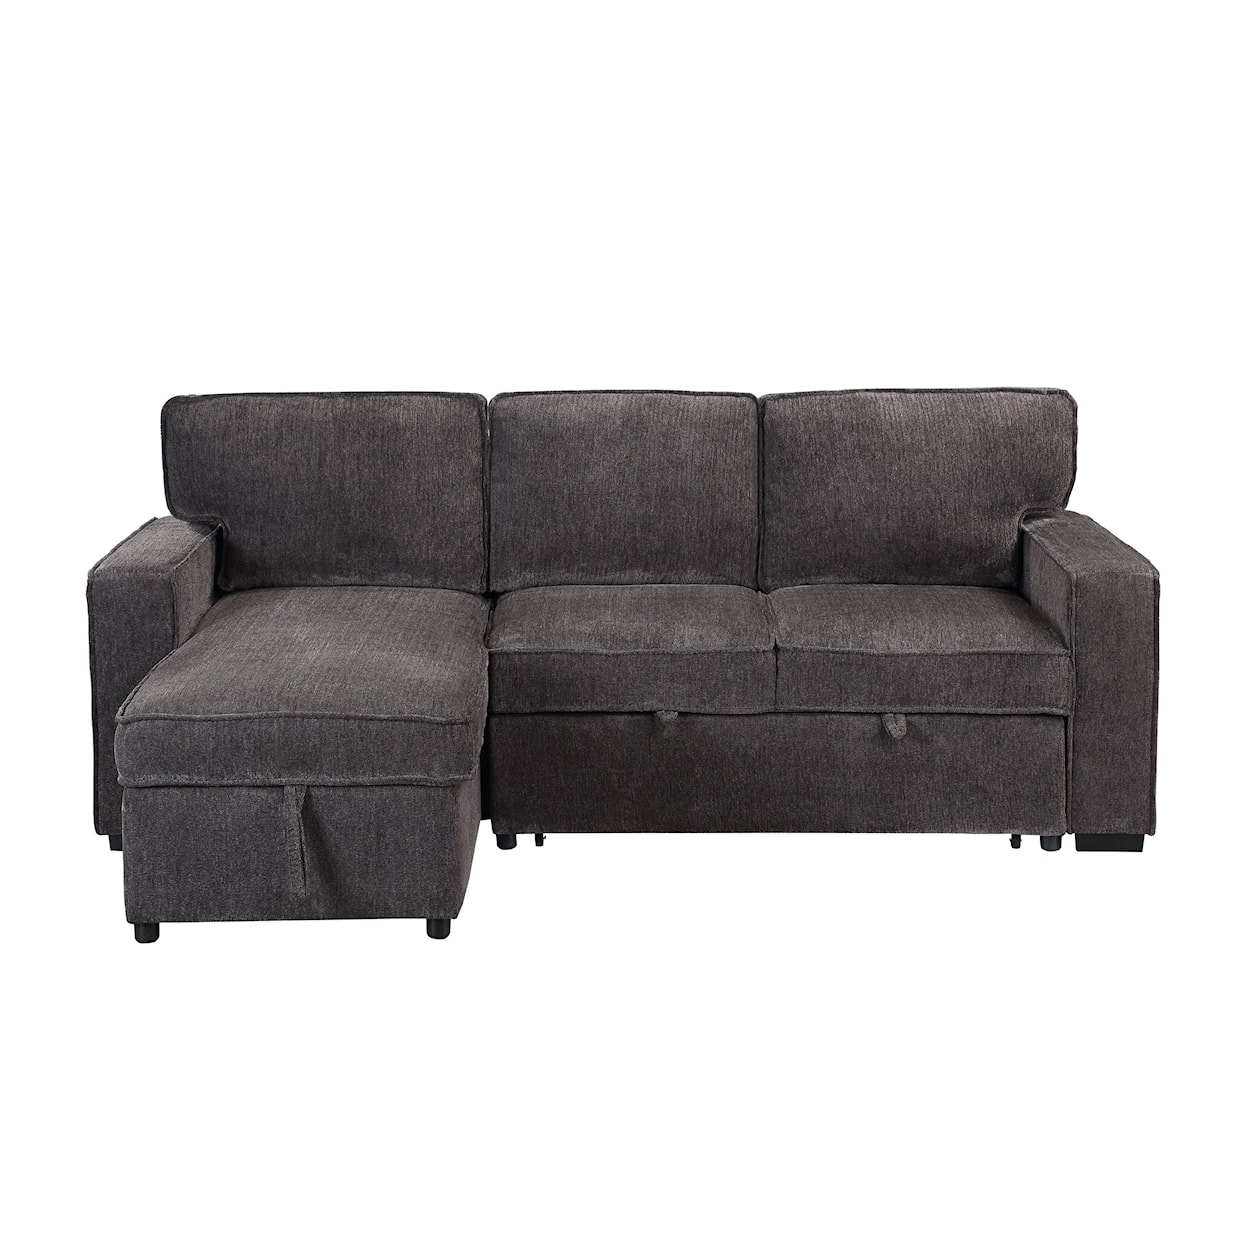 Global Furniture U0203 Reversible Sofa Bed with USB Port